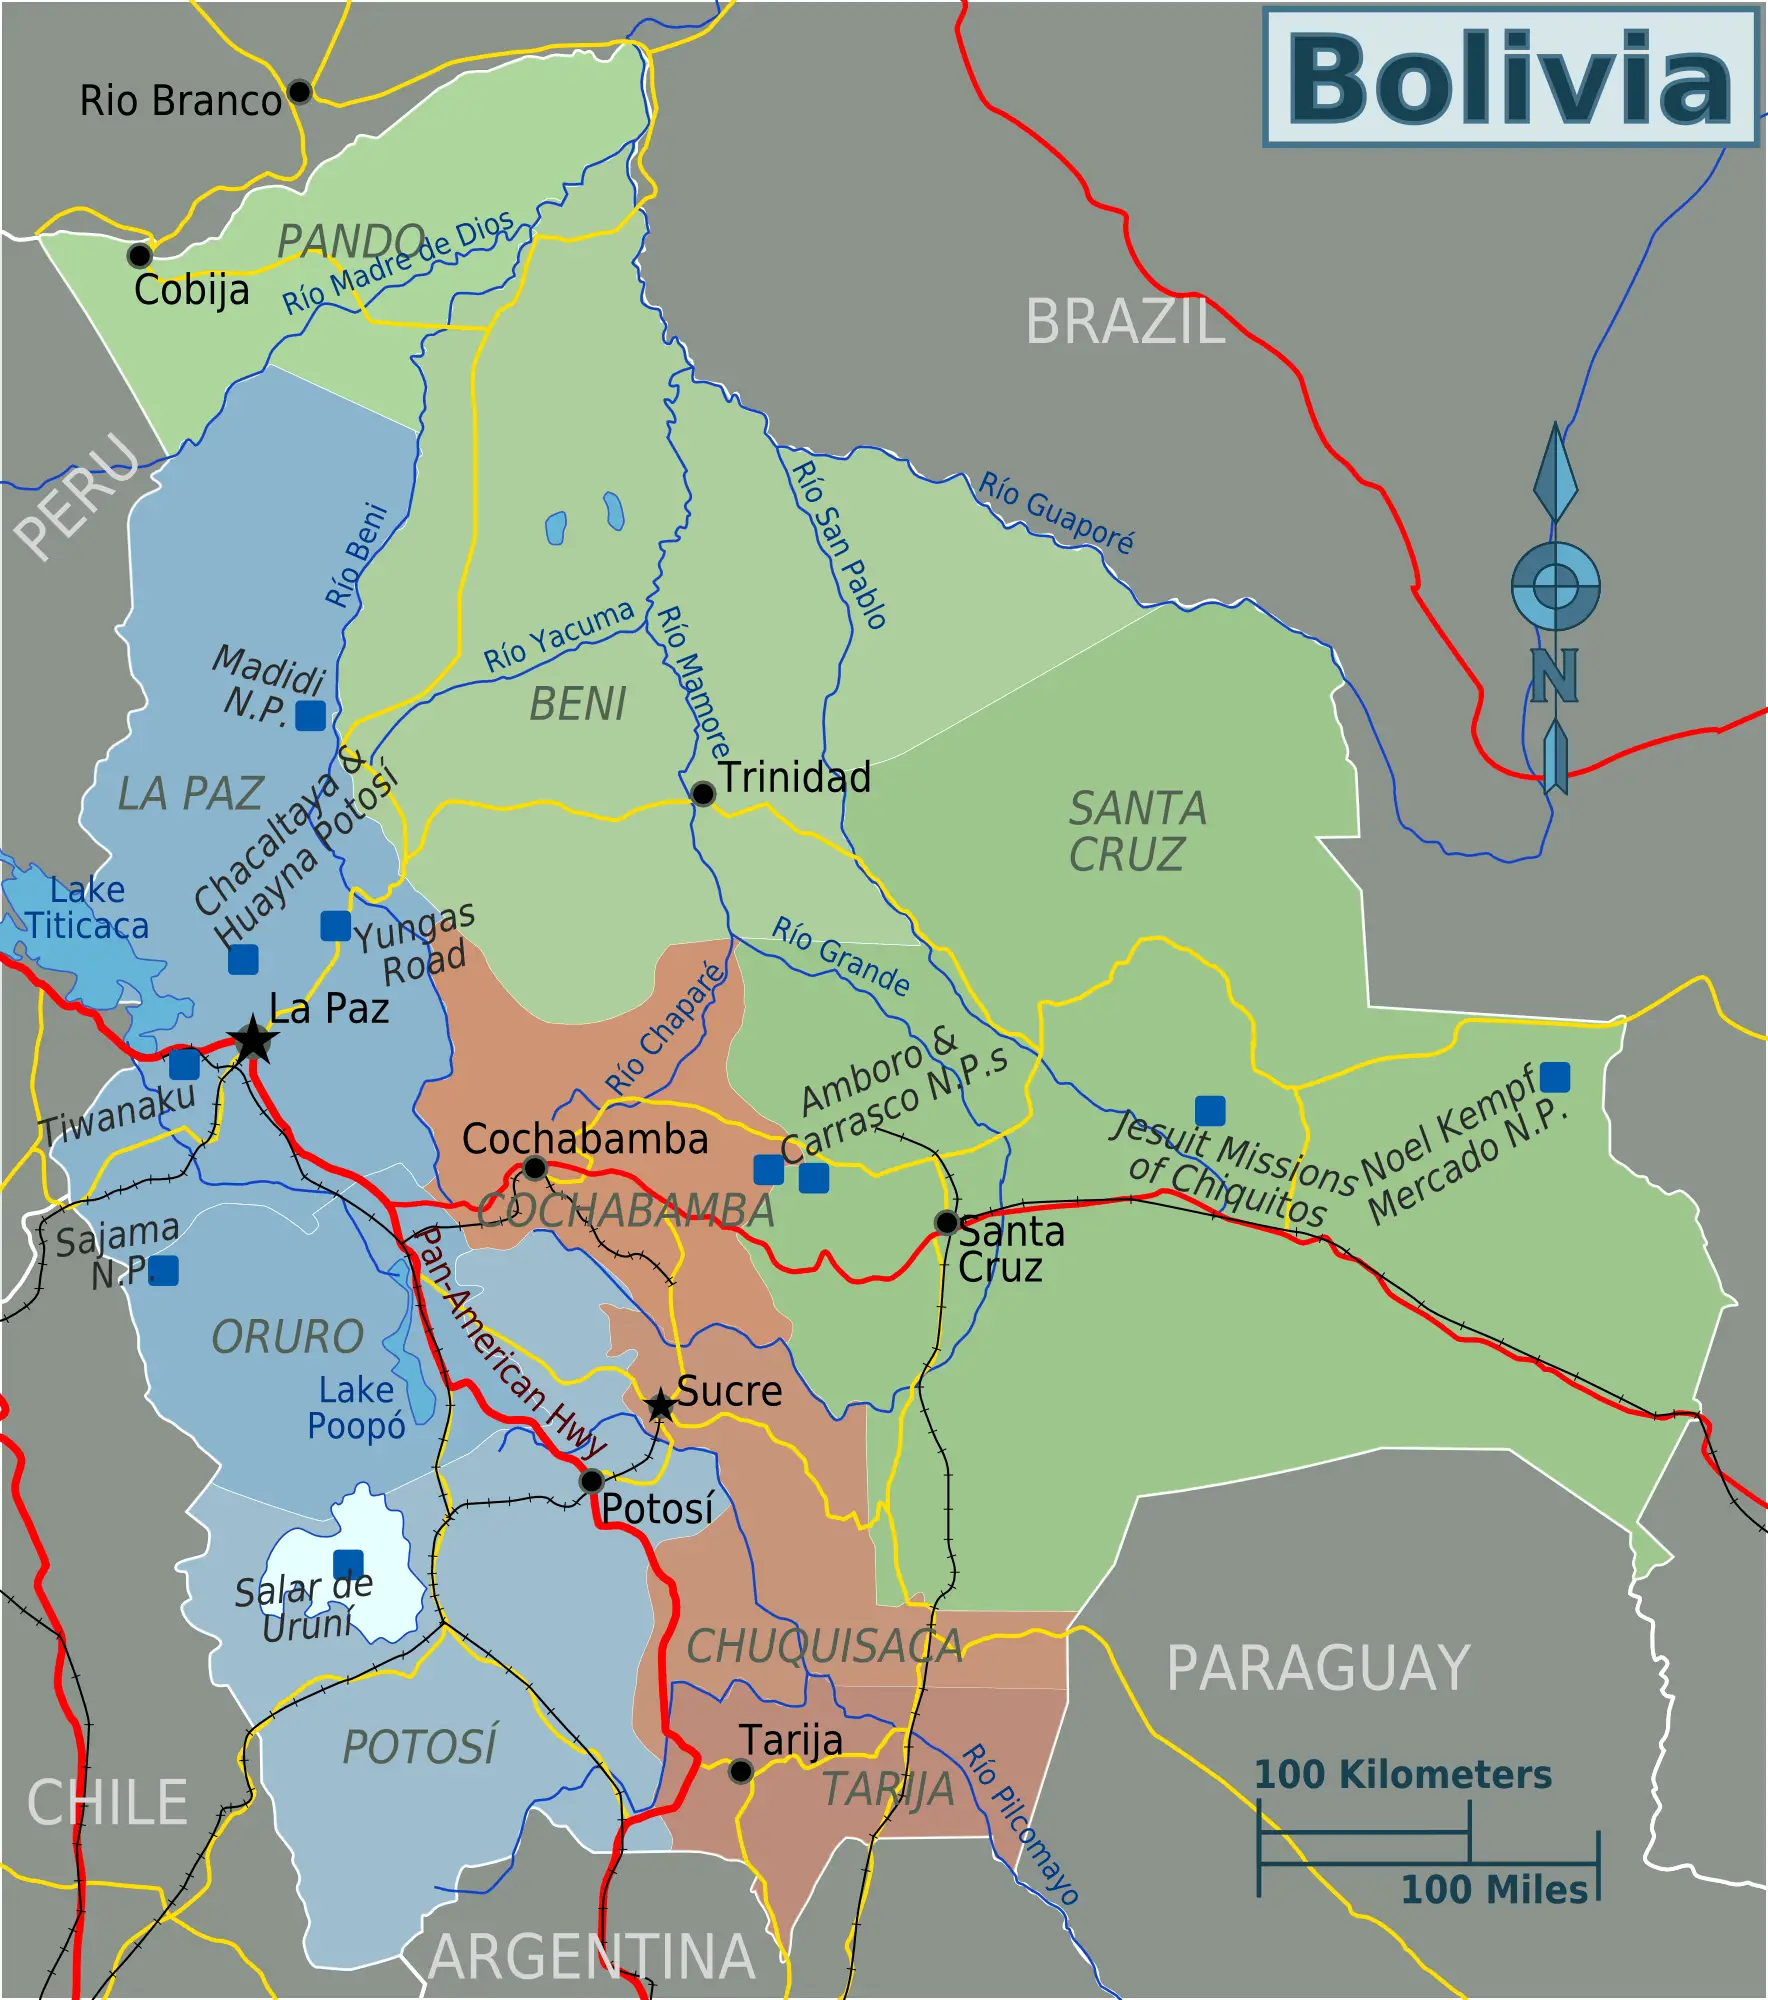 Bolivia Regions Map